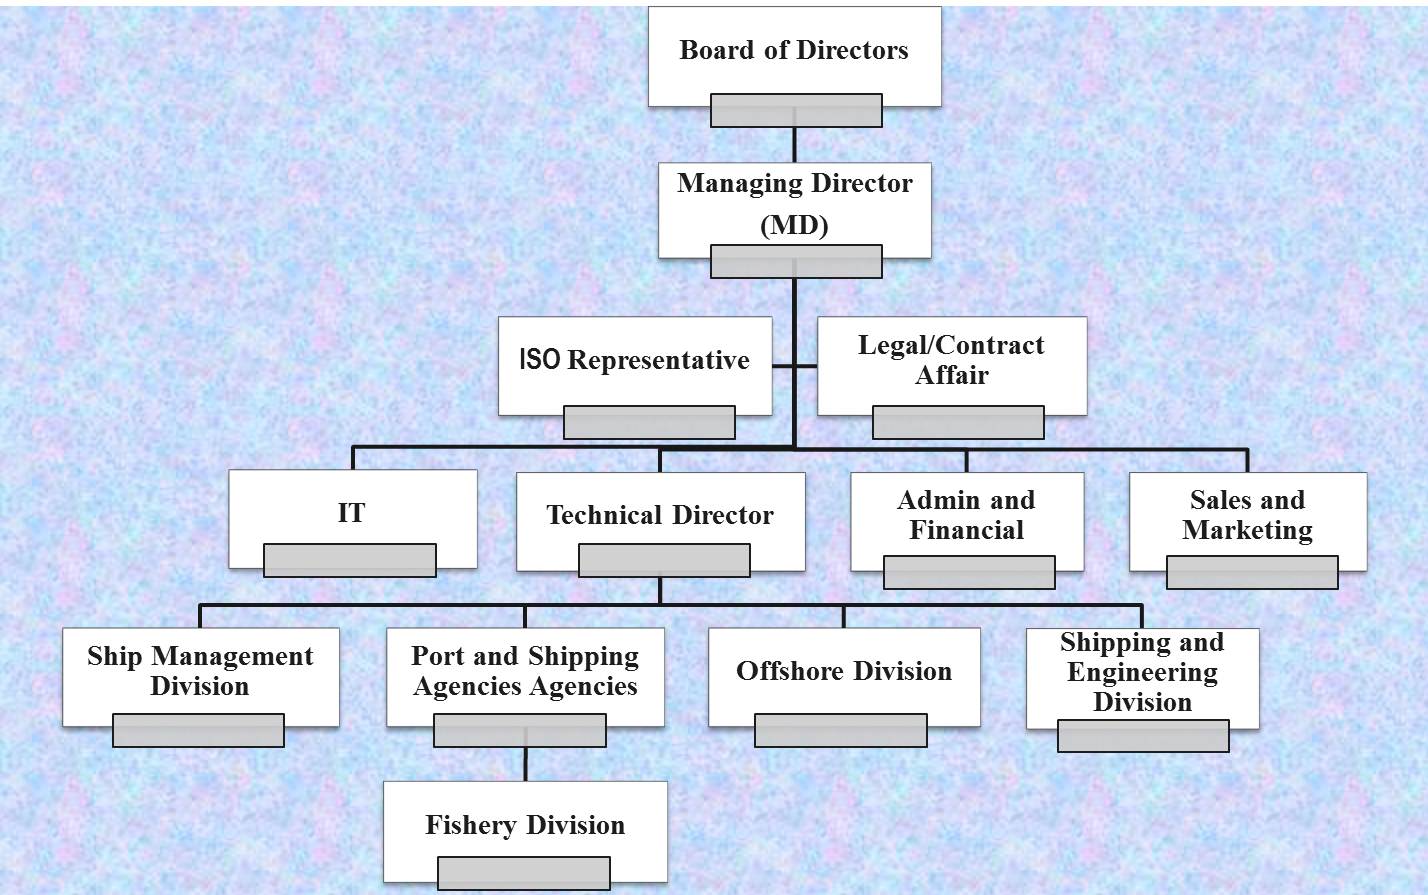 Home Organization Chart